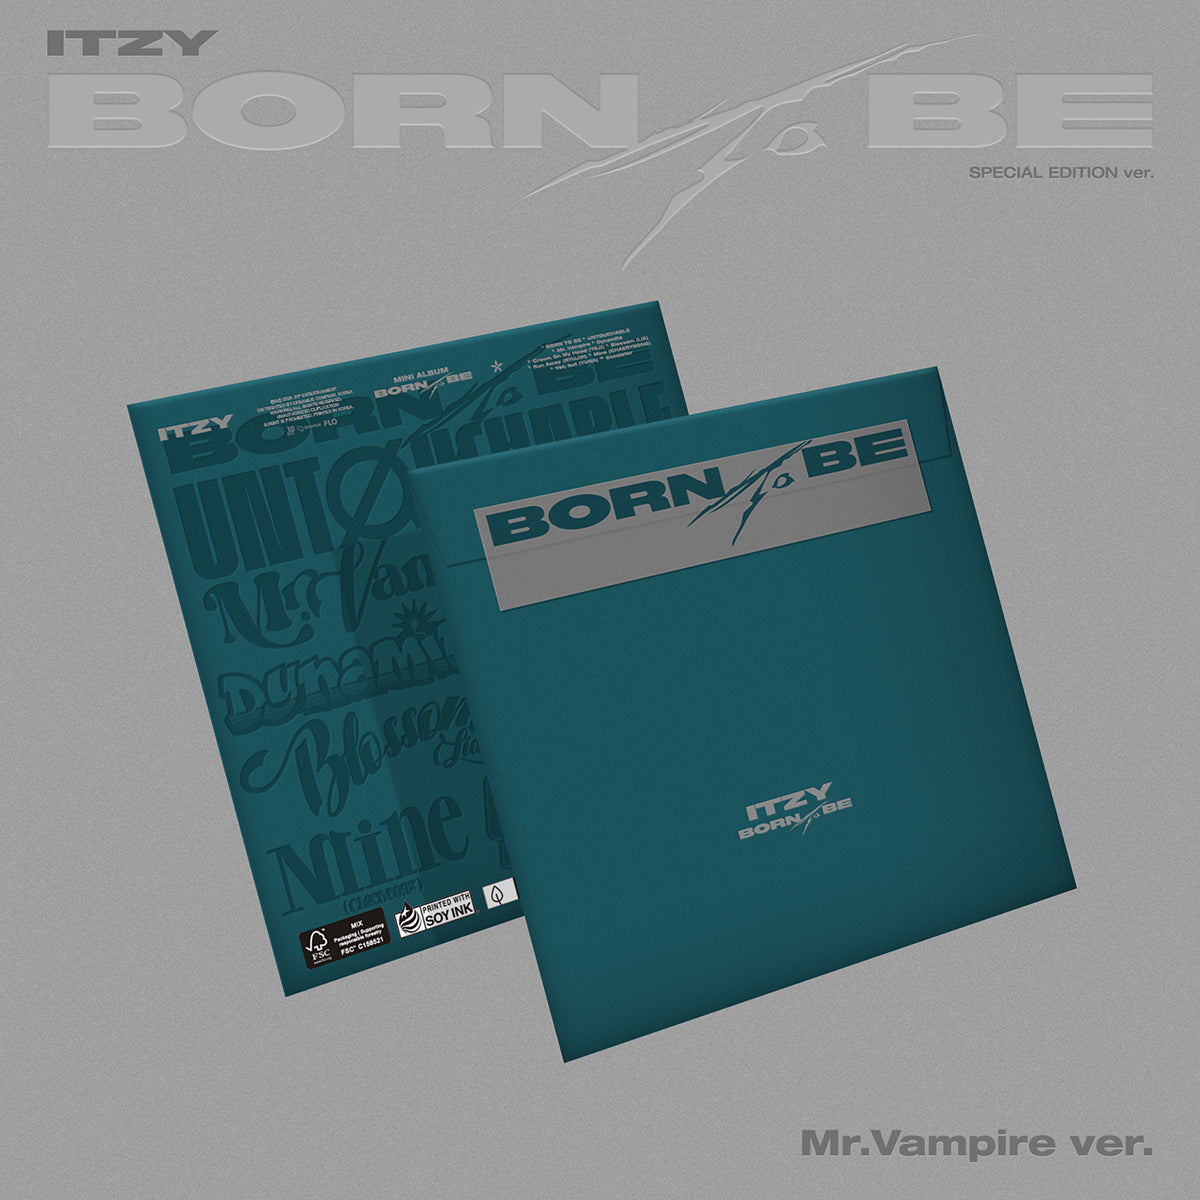 ITZY - BORN TO BE (Mr. Vampire Ver.) (SPECIAL EDITION)